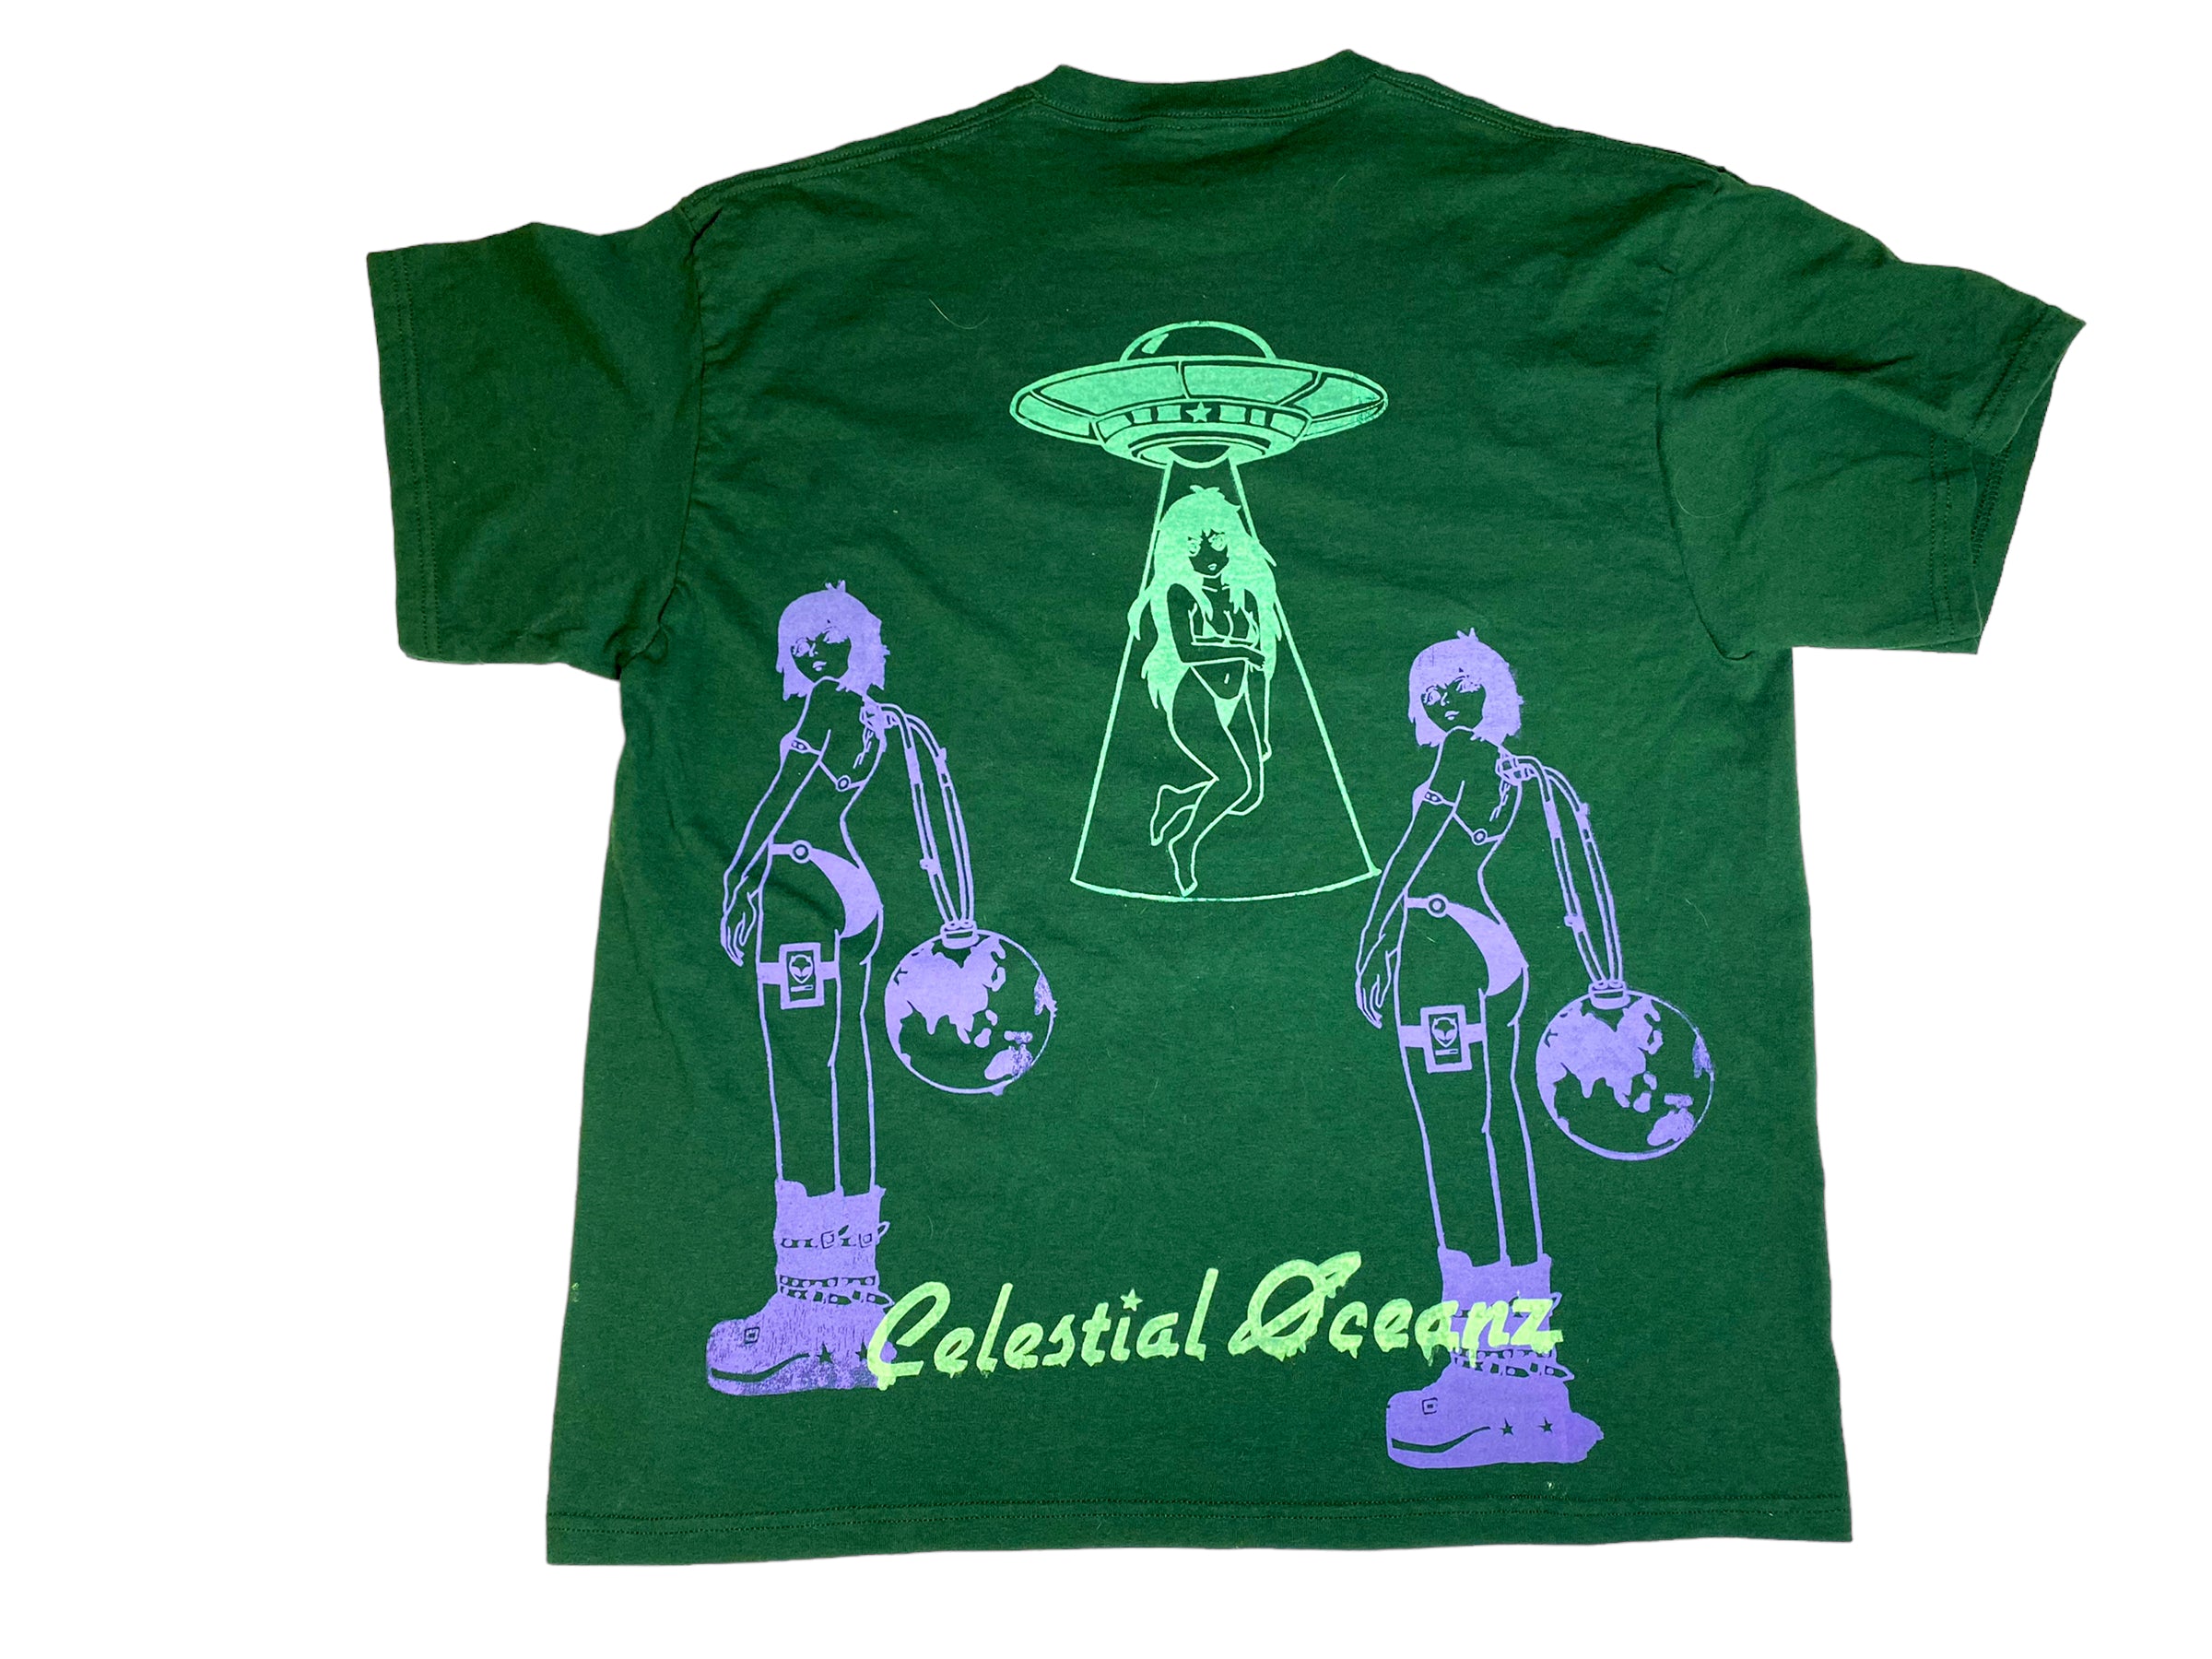 Celestial Print T-shirt